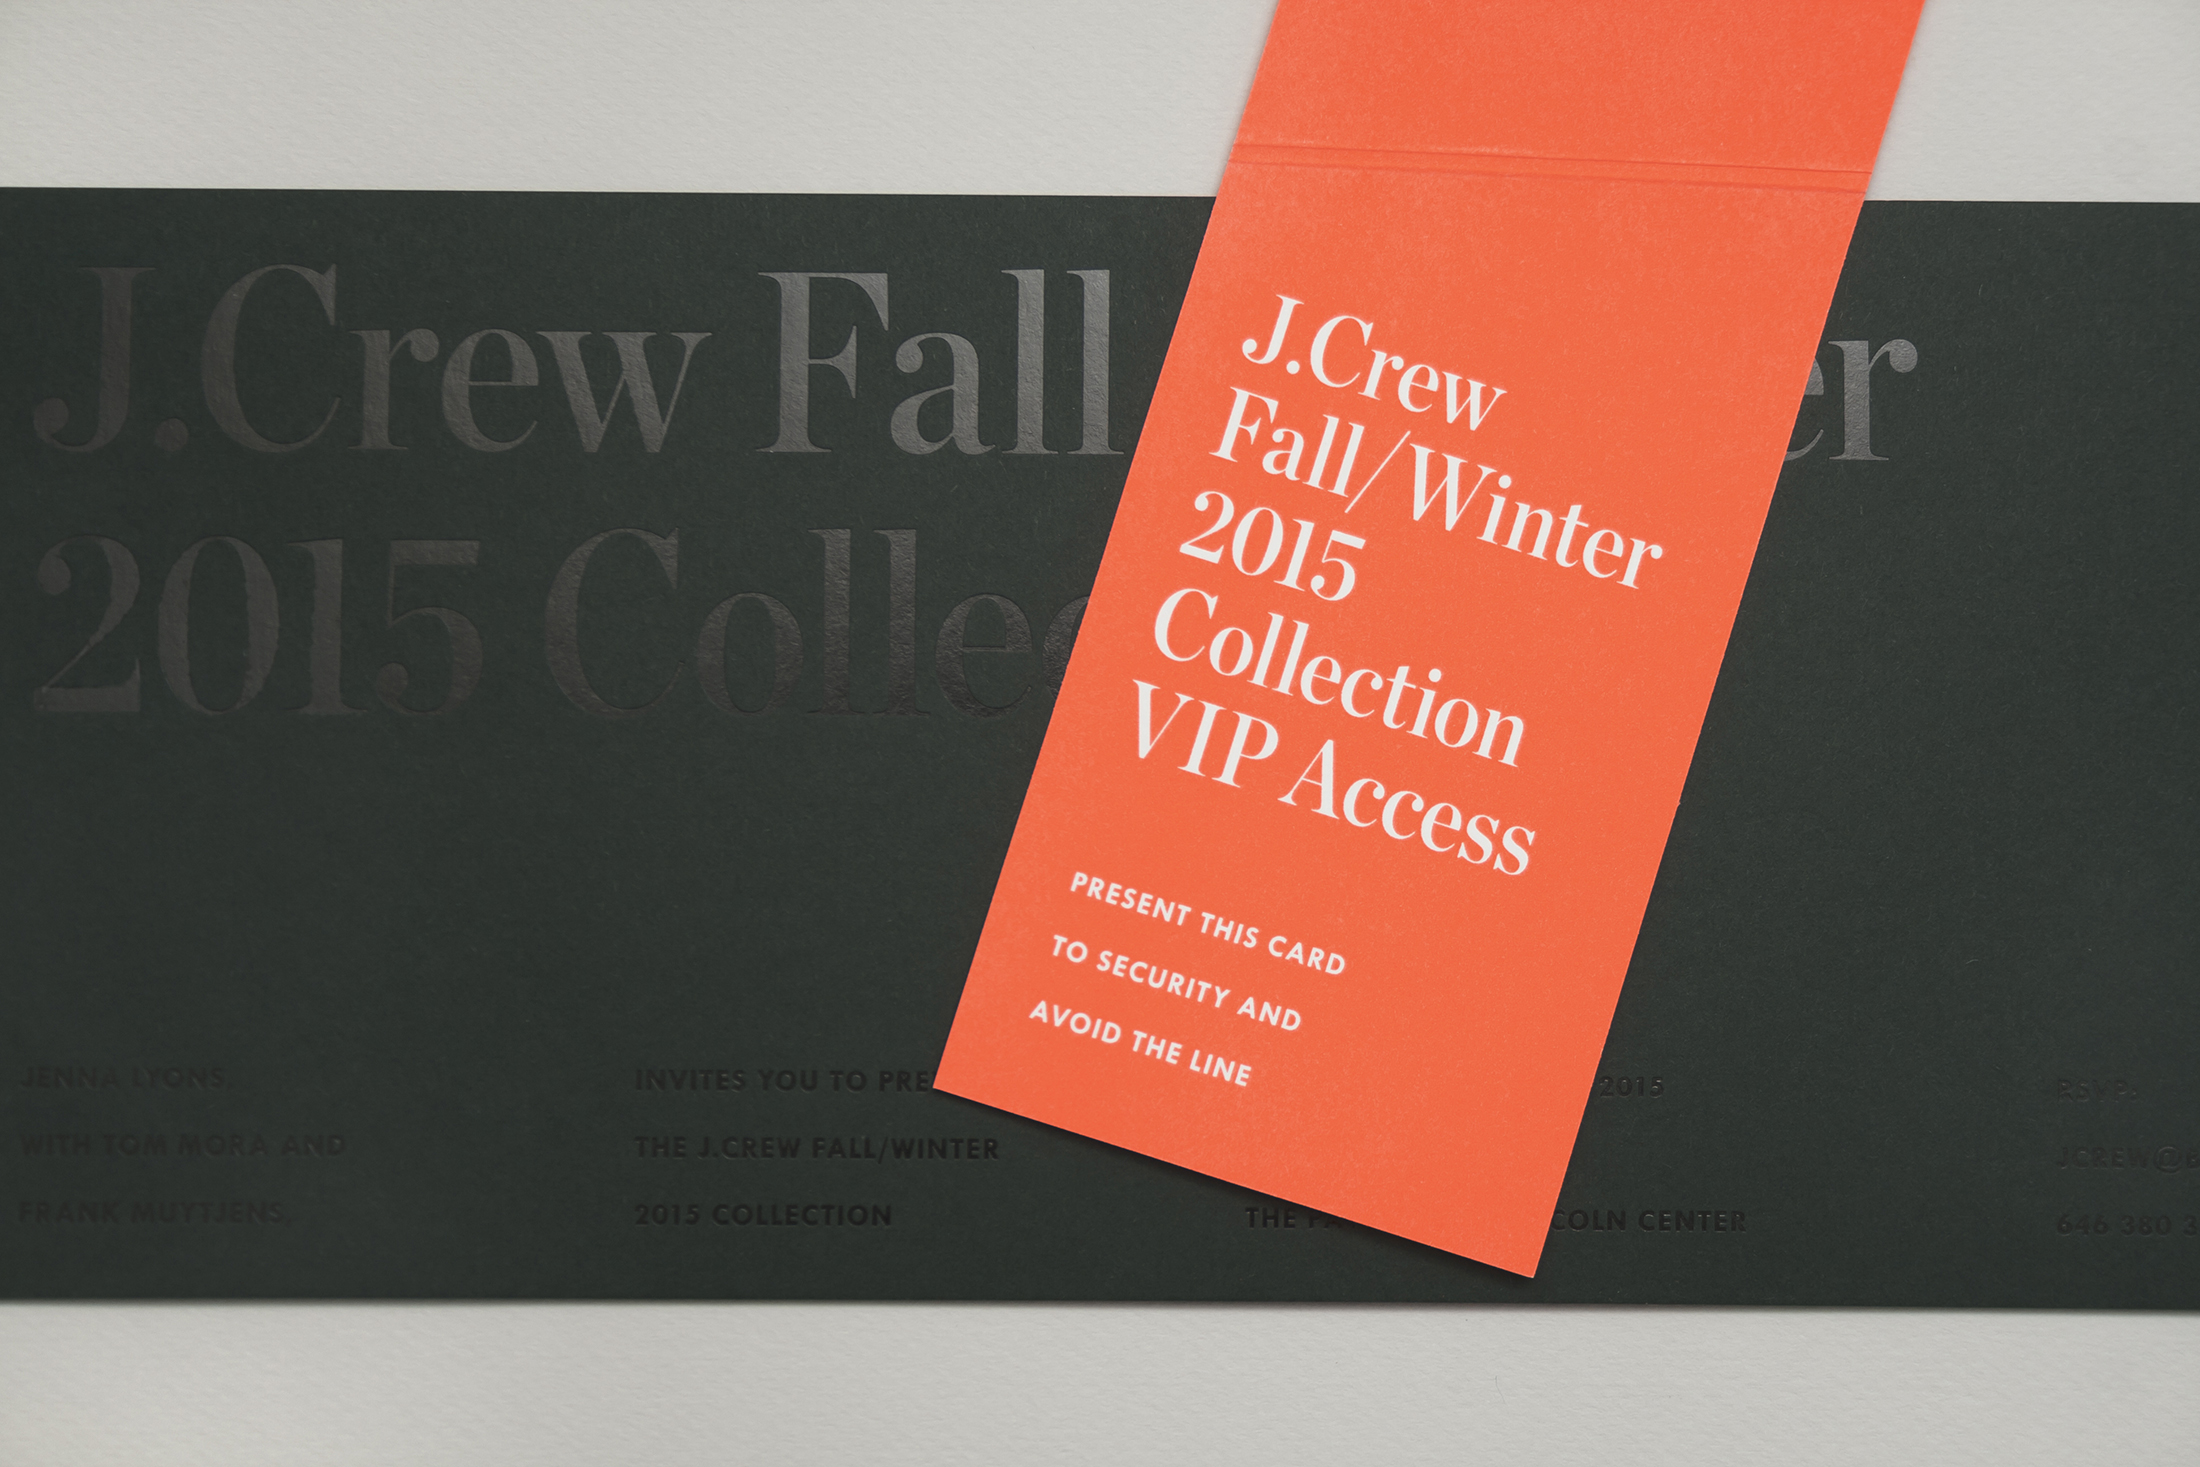 J.Crew Fall/Winter 2015 Invitation